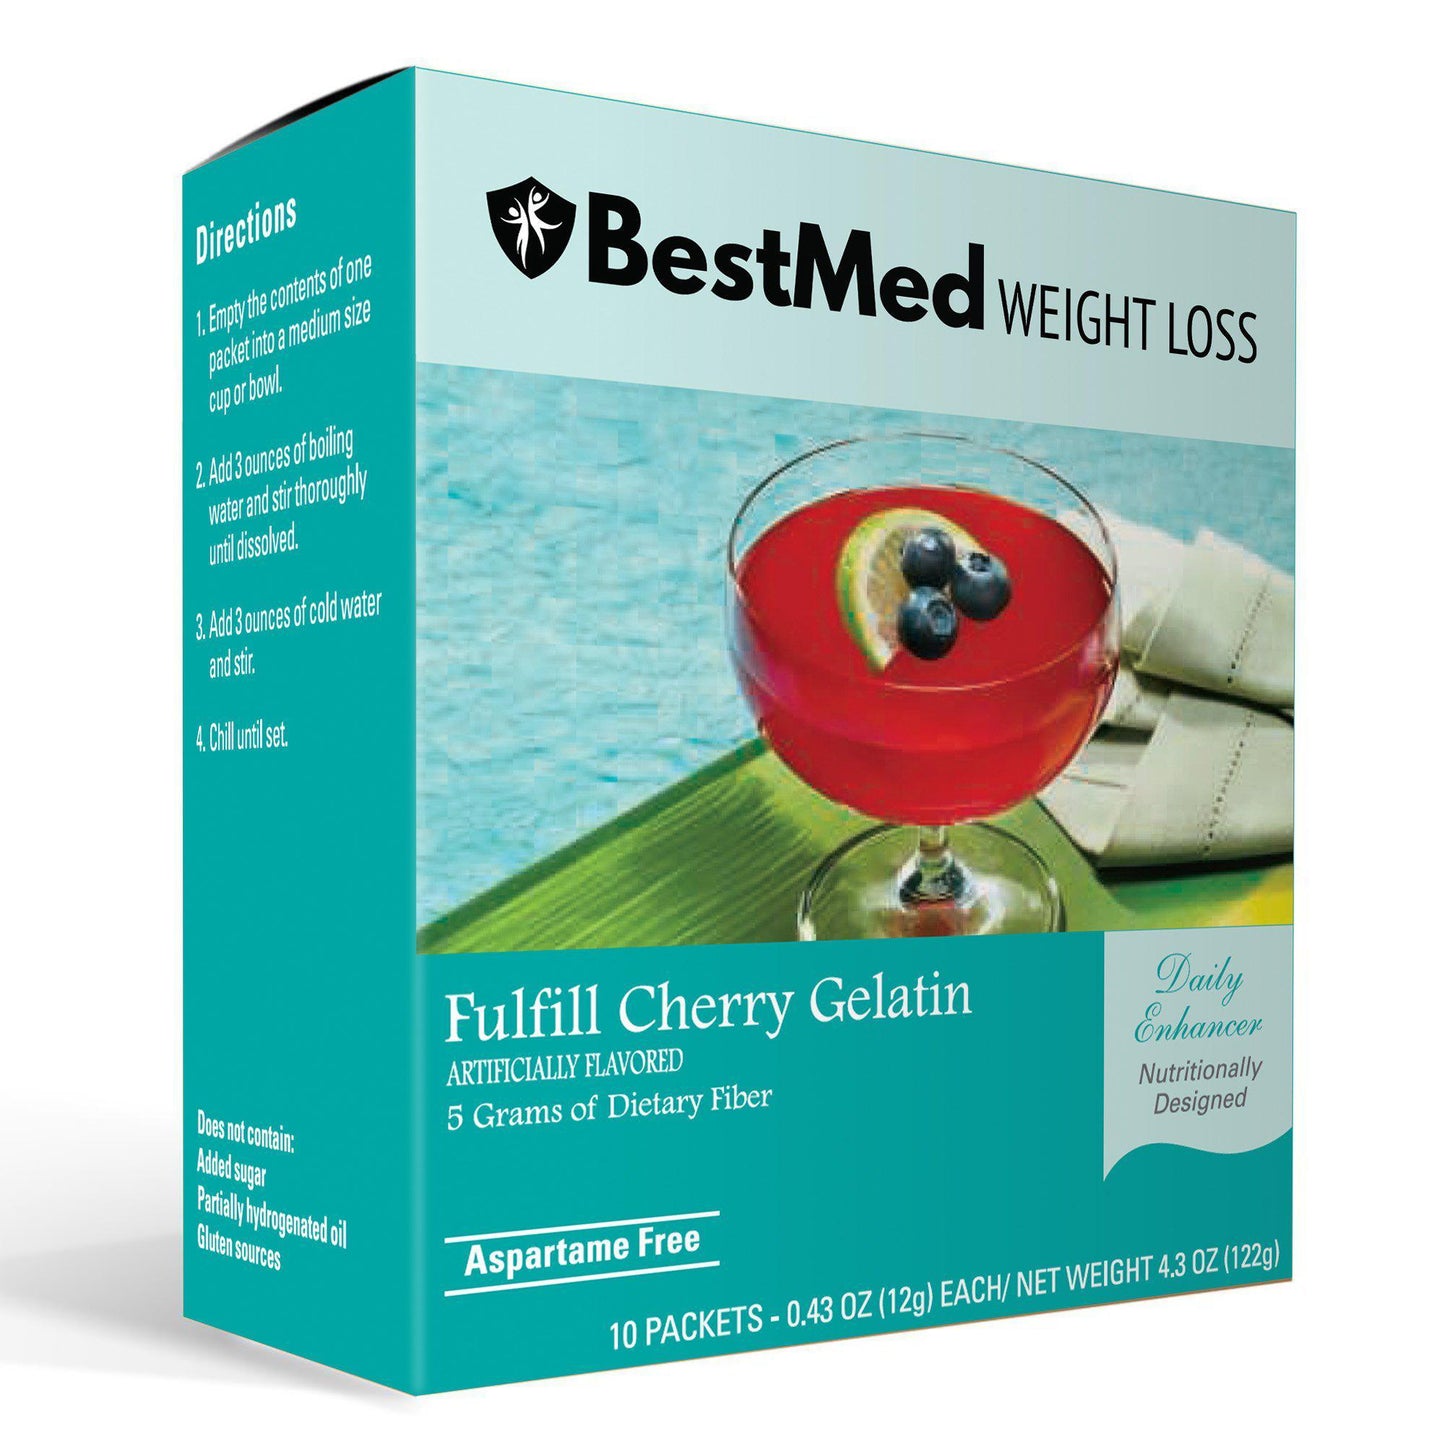 Fulfill Cherry Gelatin (10/Box) - BestMed - Doctors Weight Loss